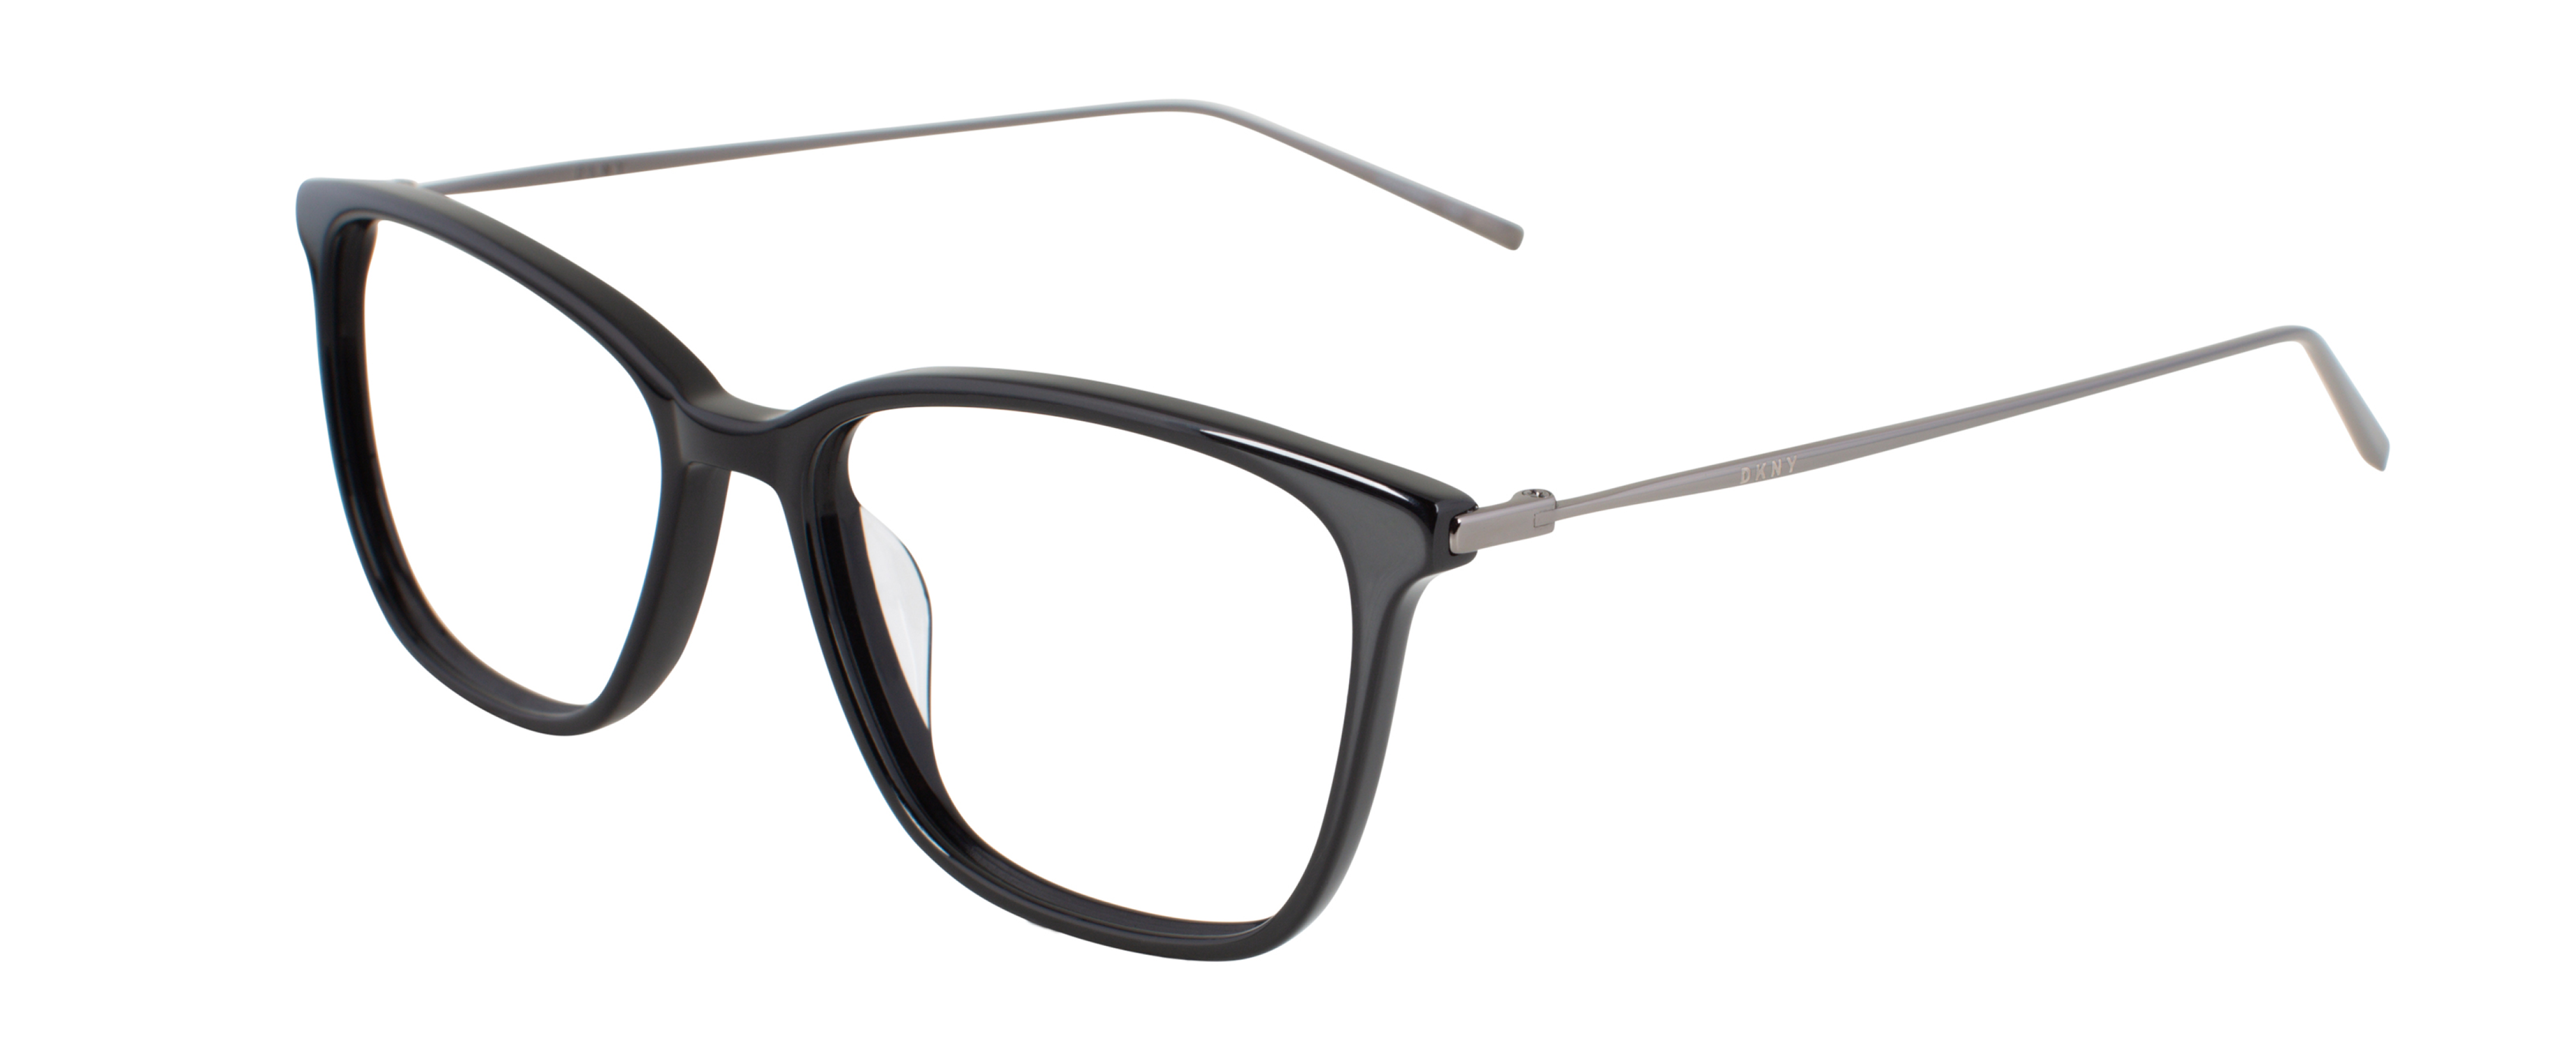 DKNY eyewear – #LoveGlasses